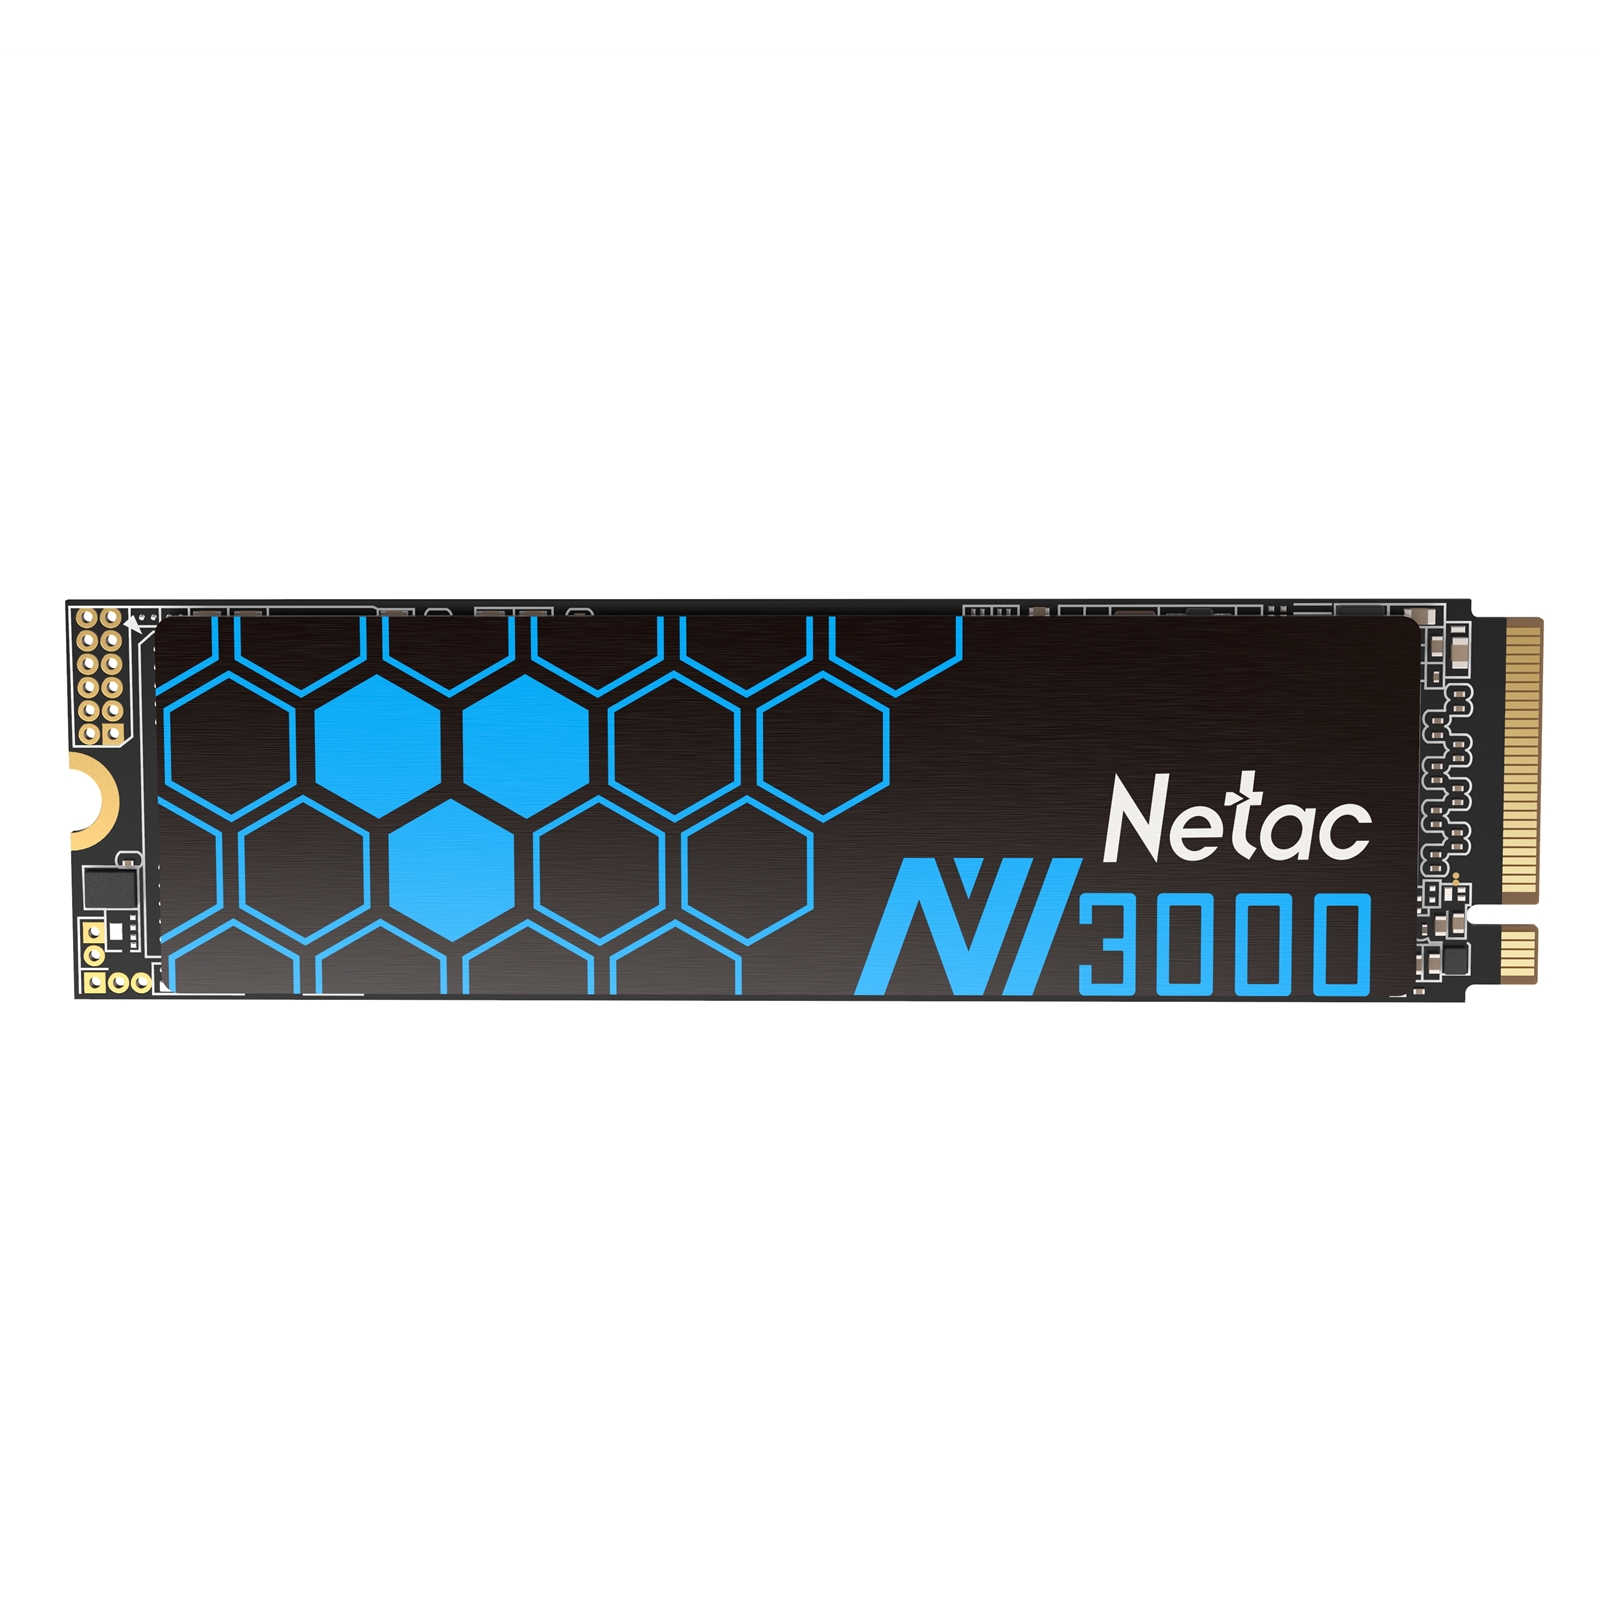 NETAC NV3000 (NT01NV3000-500-E4X) 500GB NVMe M.2 Interface, PCIe x3, 2280 Length, Read 3300MB/s, Write 2400MB/s, 5 Year Warranty